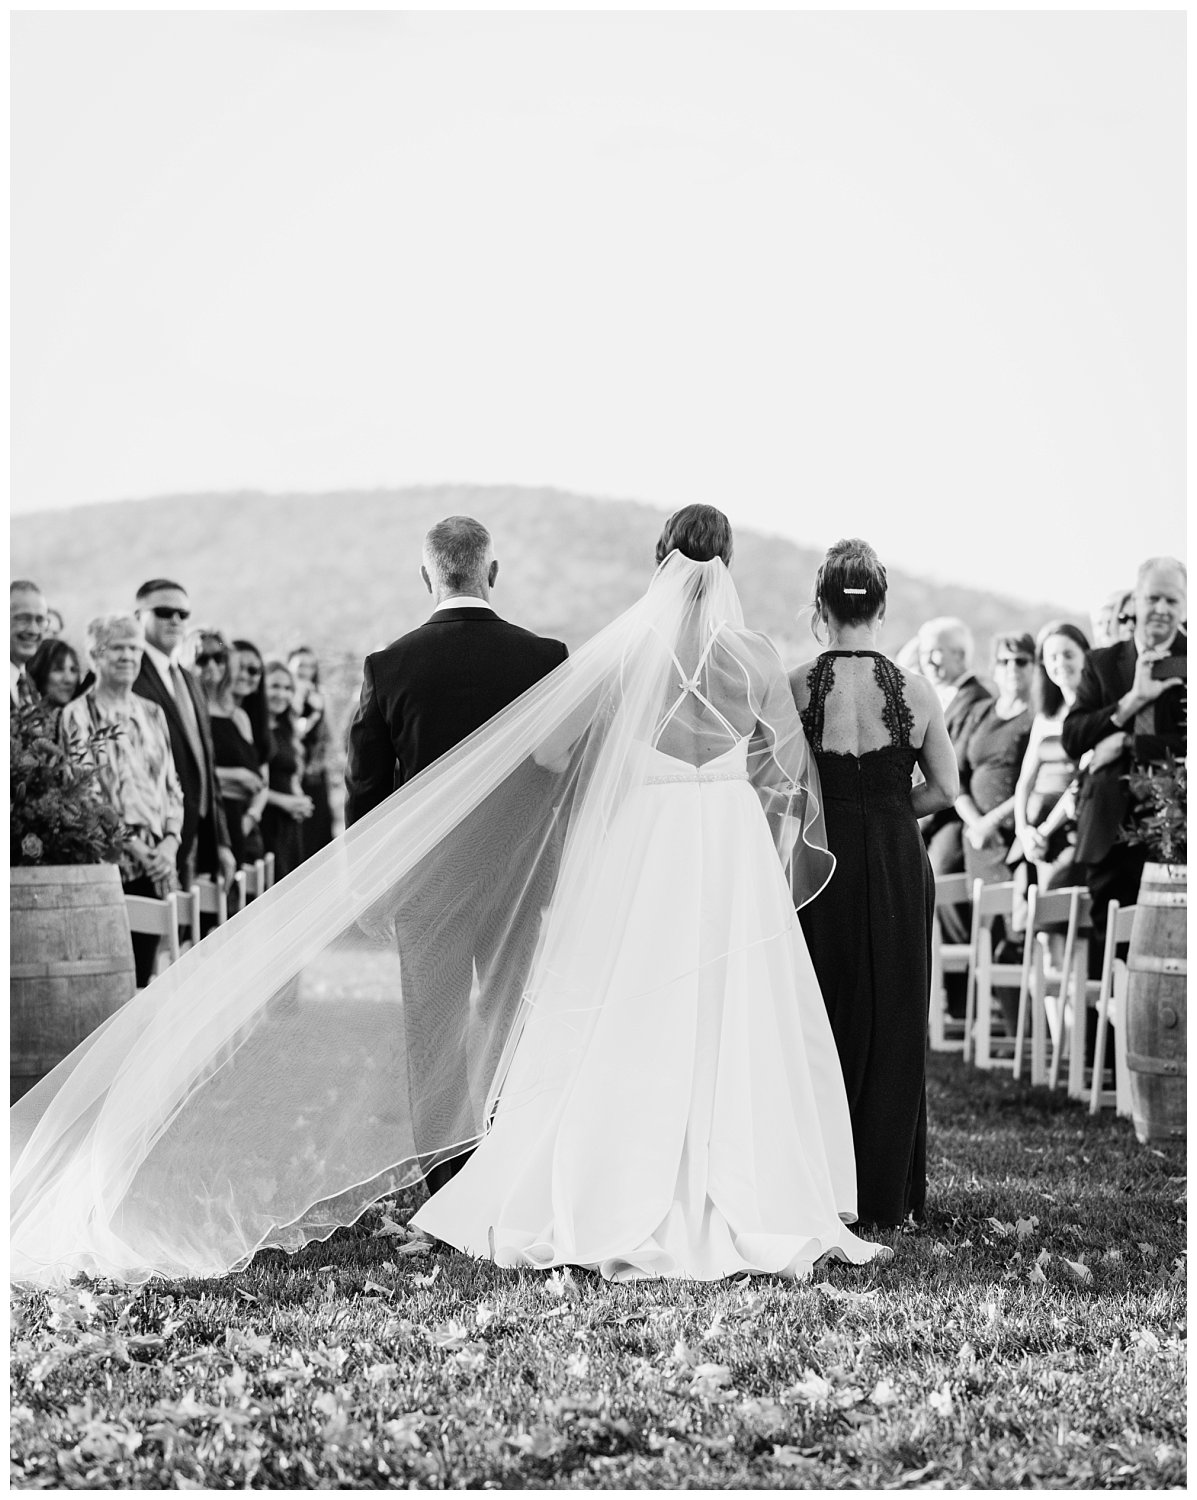 Wedding ceremony at Keswick Vineyard photographed by Heather Dodge Photography